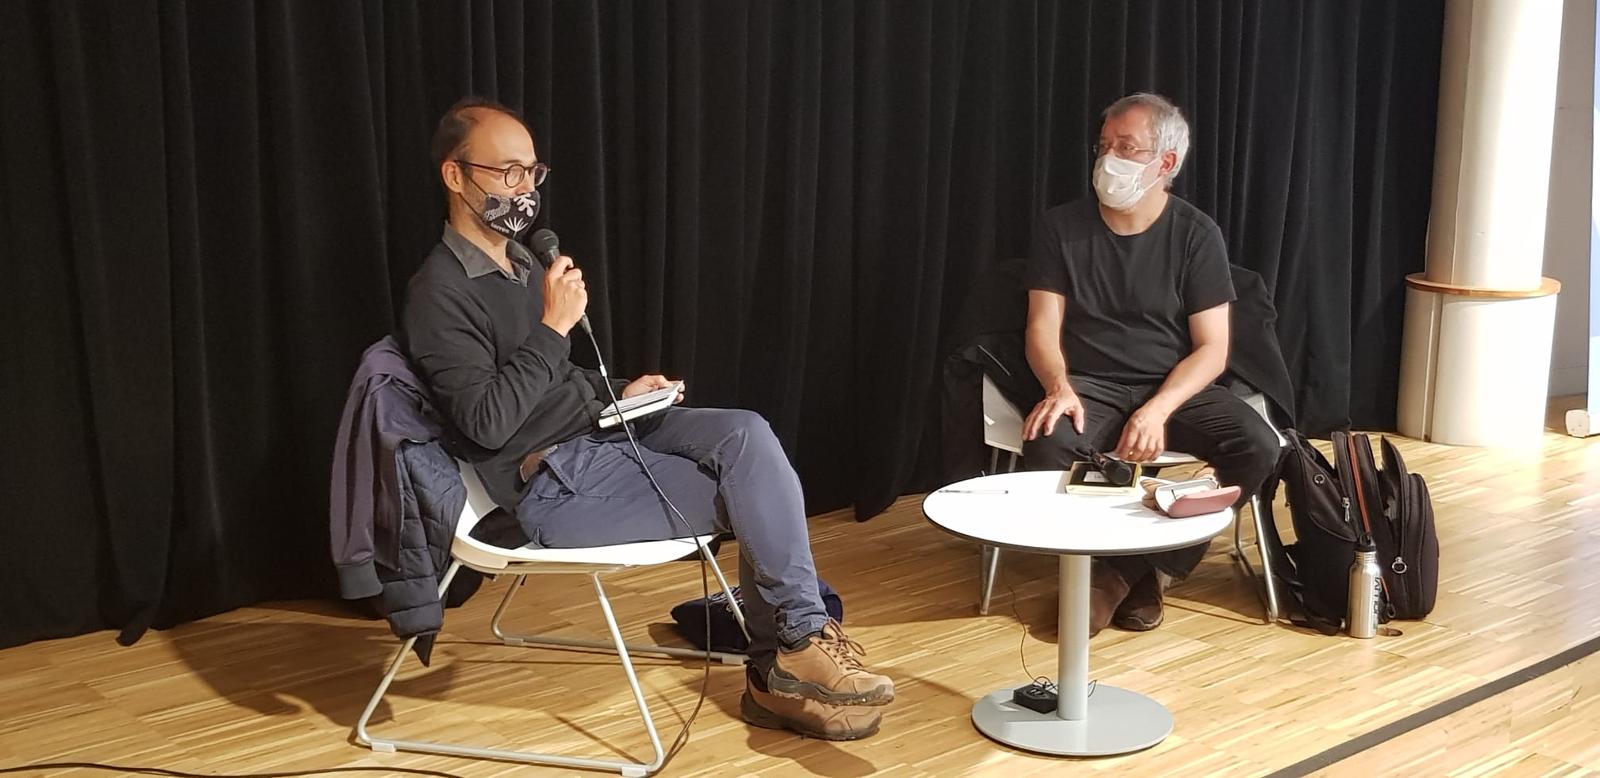  Jorge Riechmann conversation with Gabi Martínez, Saturday 17, Guinardó Library - Mercè Rodoreda, Barcelona Poesia 2020